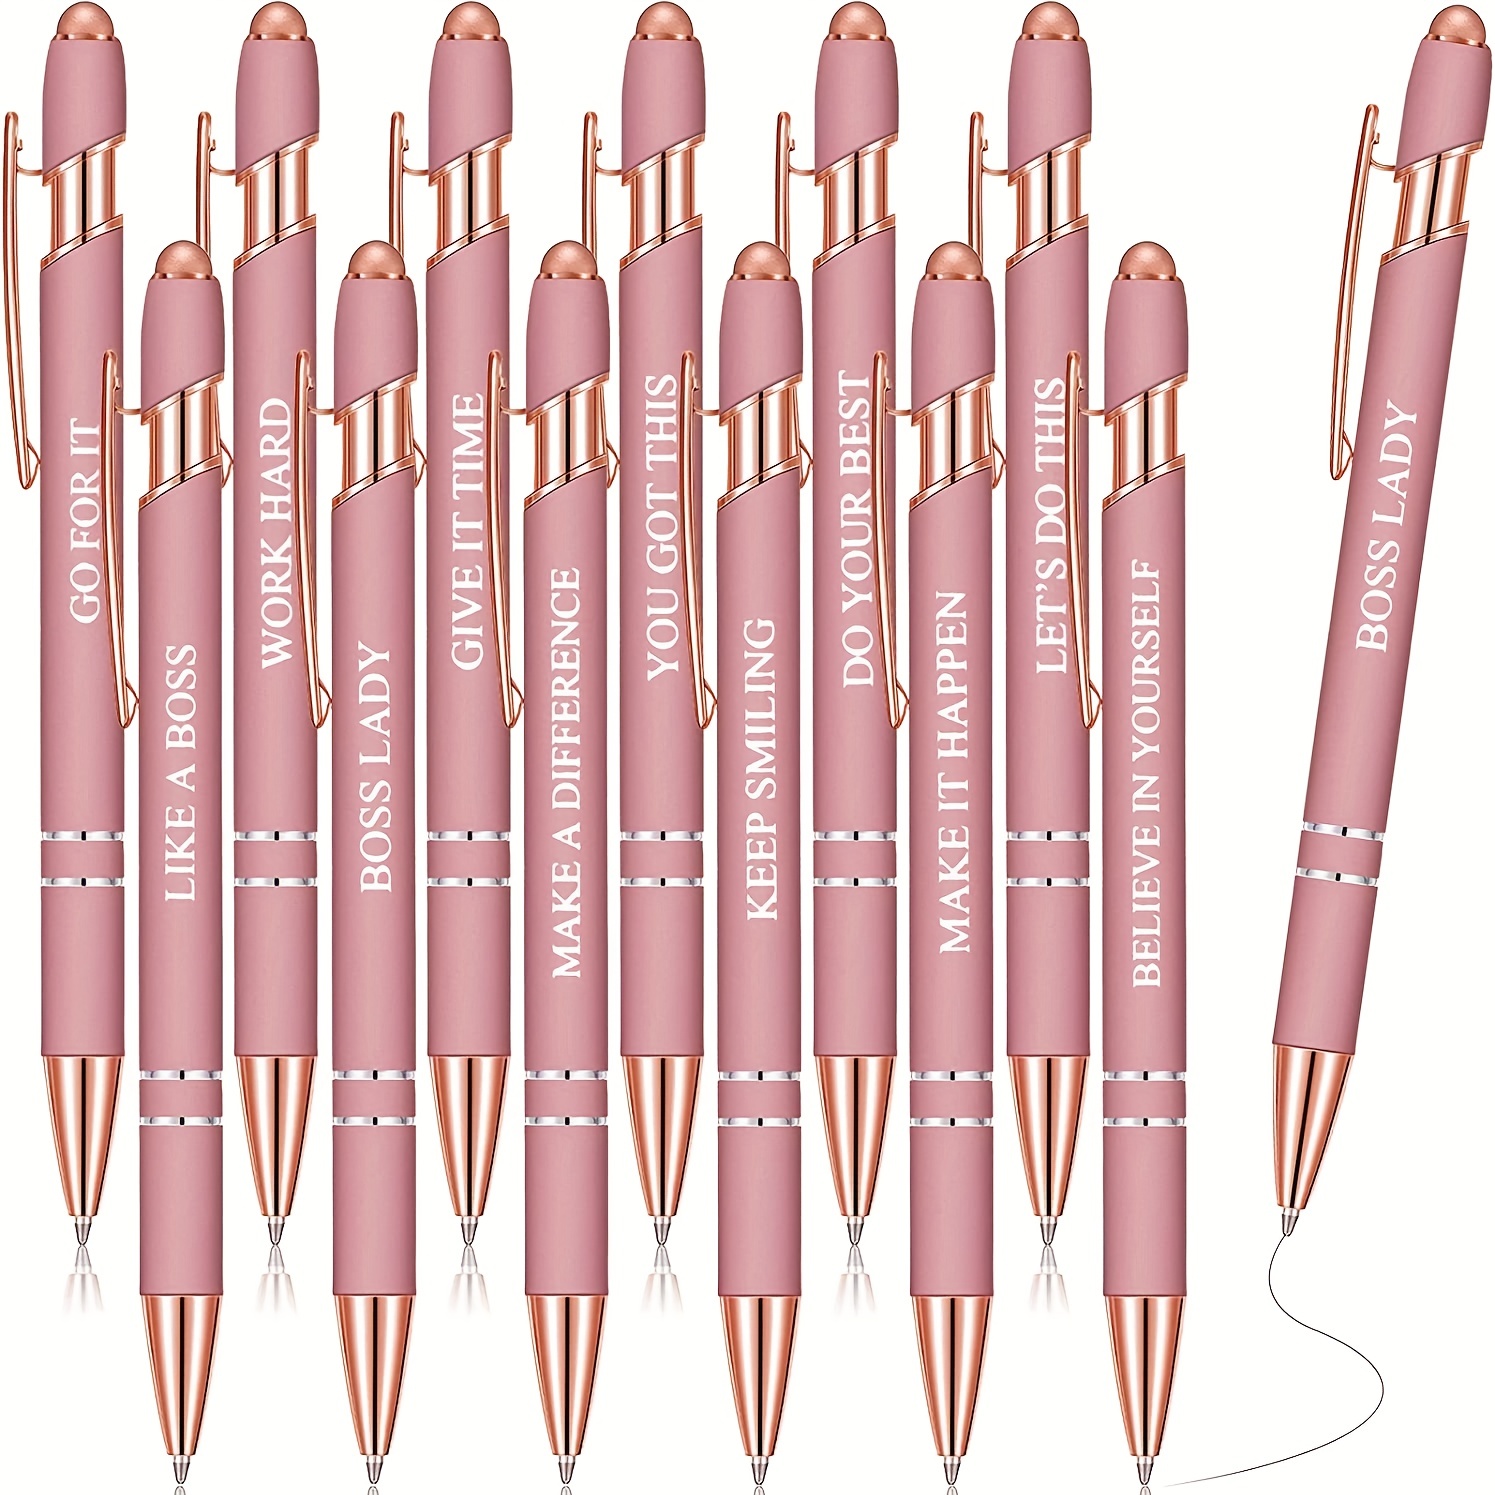  50 Inspirational Pens, Pens Bulk, Ballpoint Pens with  Inspirational Quotes, Funny Customized Pens, Black Ink Pens, Gel Pens Bulk,  Thank You Pens, Inspirational Gifts for Women Men, Inspirational : Office  Products